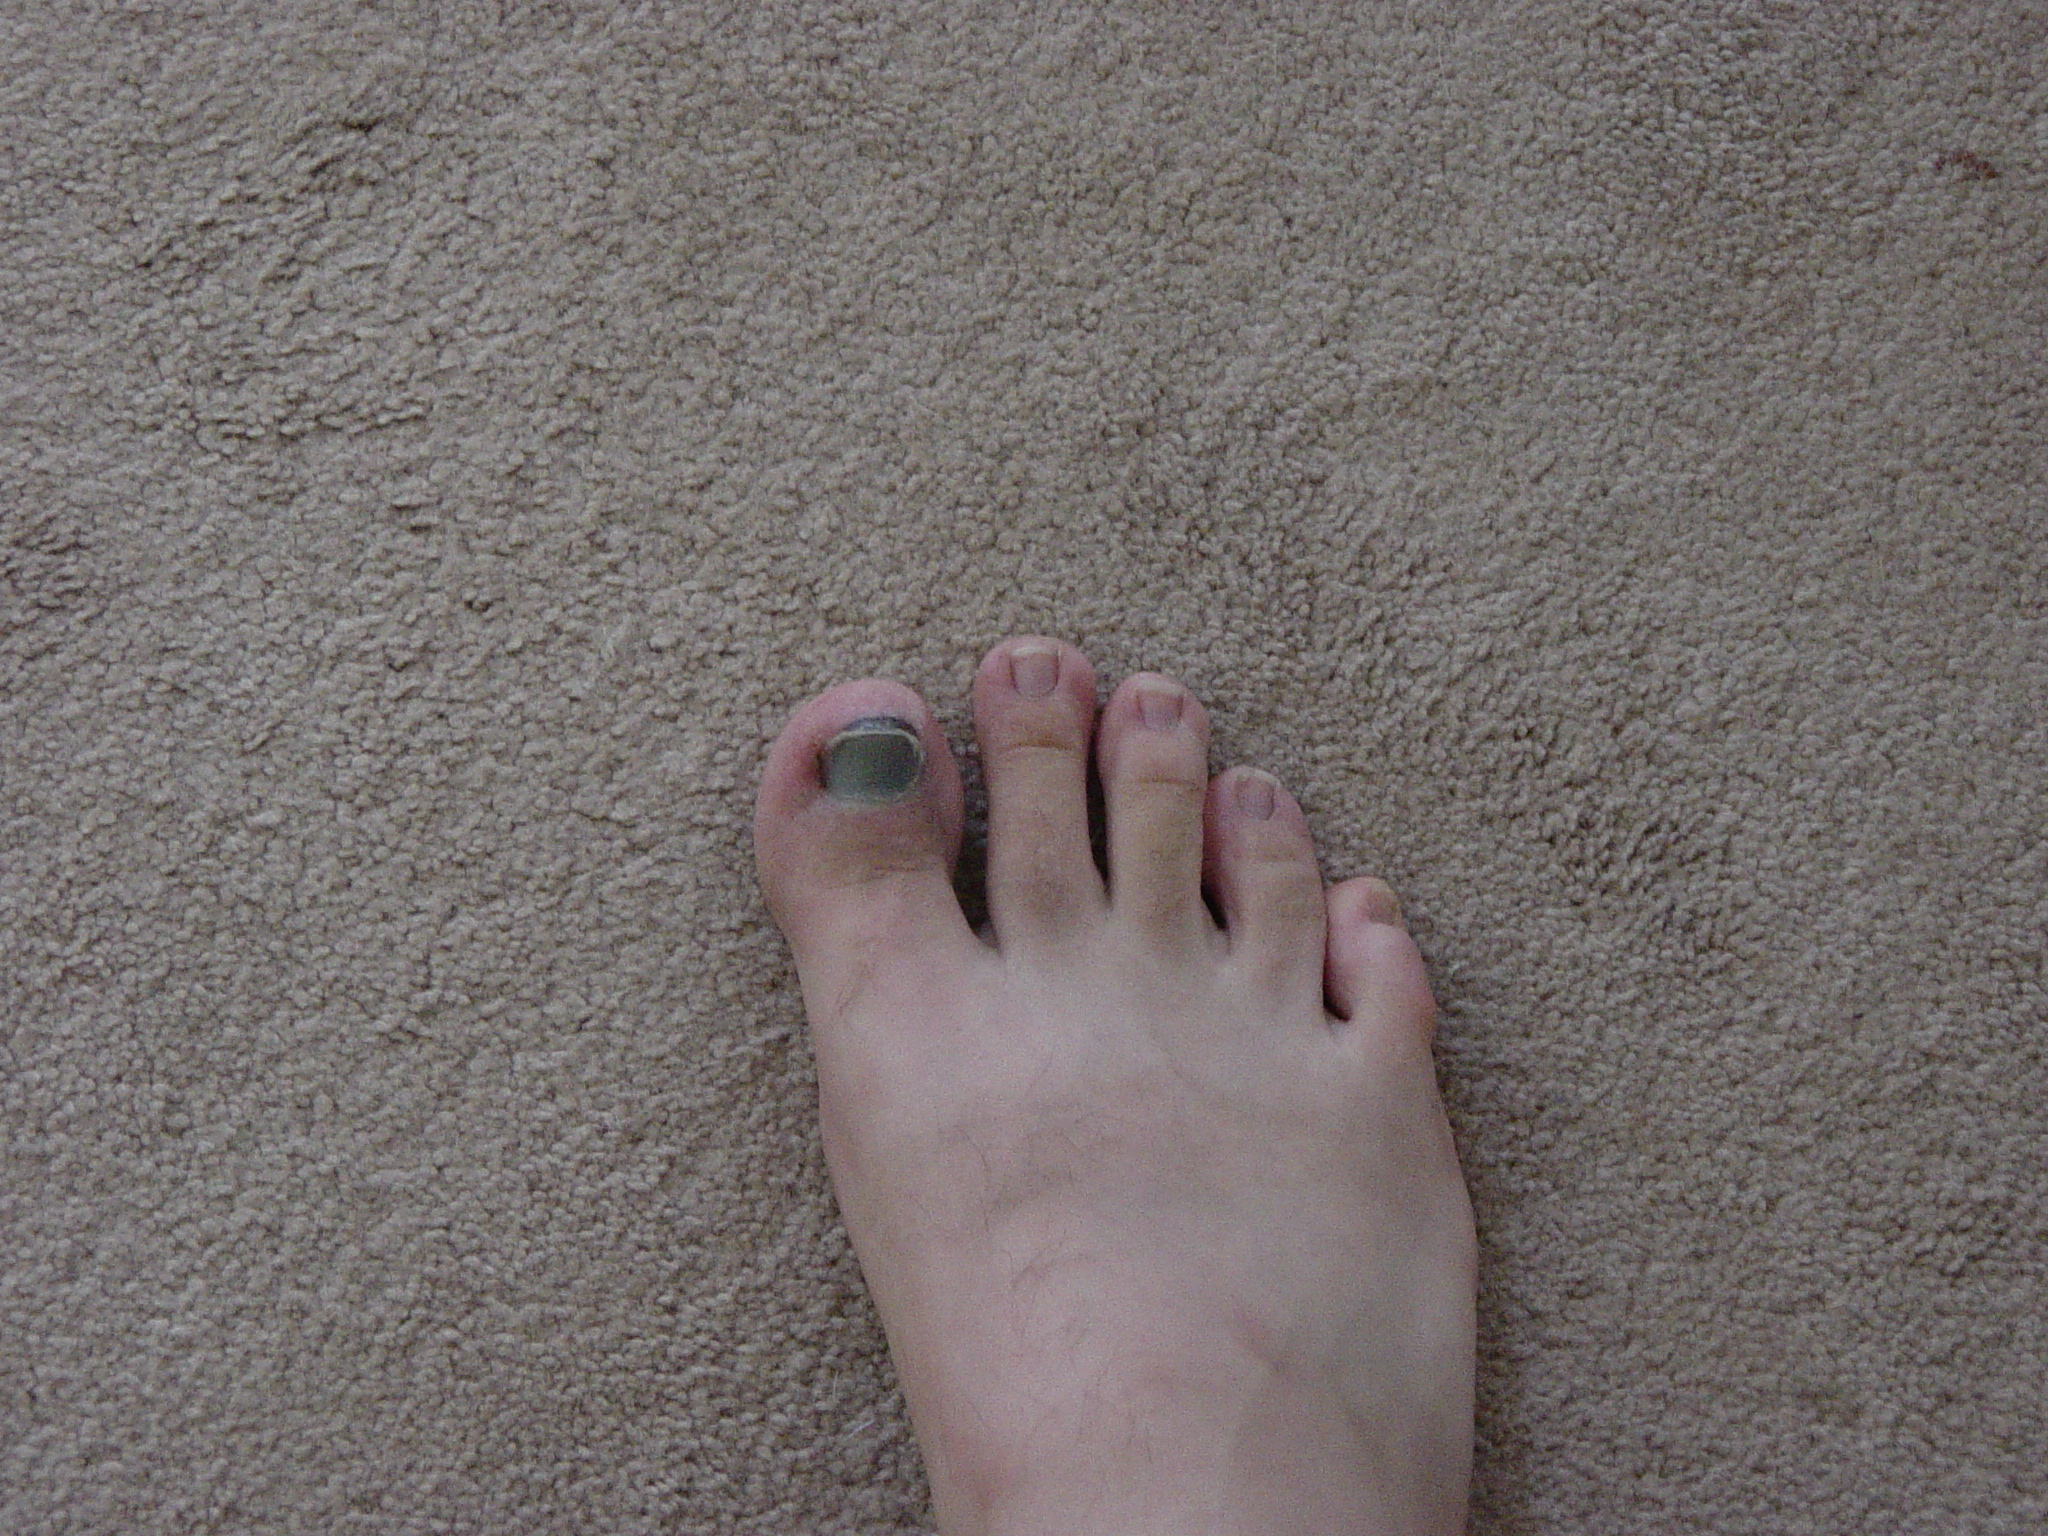 My toe.  Hurt it last week.  Ow!